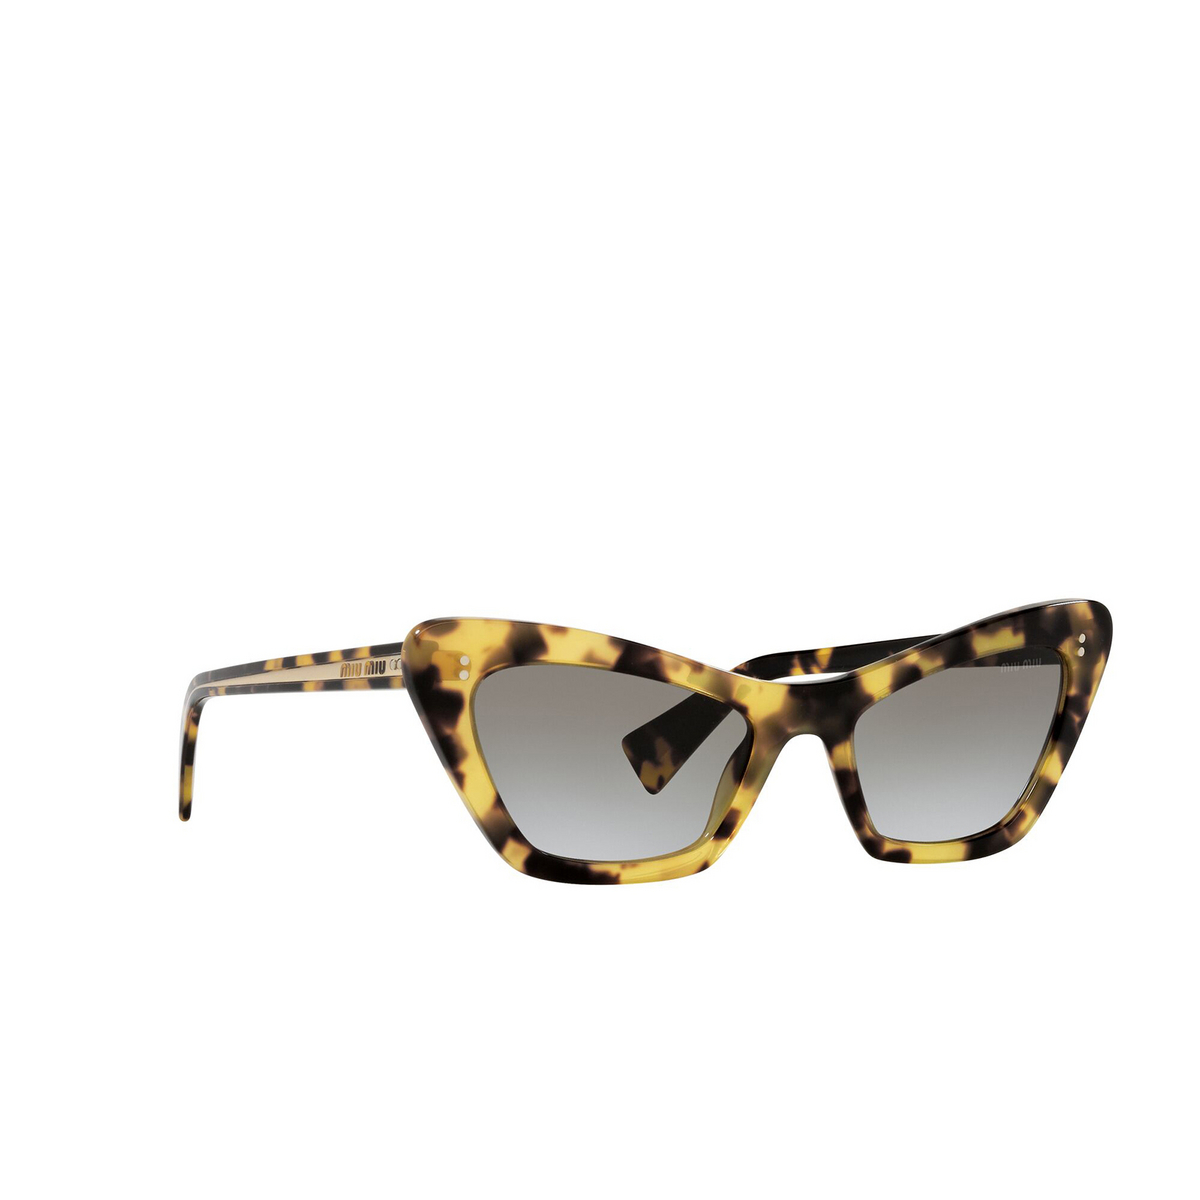 Miu Miu® Cat-eye Sunglasses: MU 03XS color Light Havana 7S00A7 - three-quarters view.